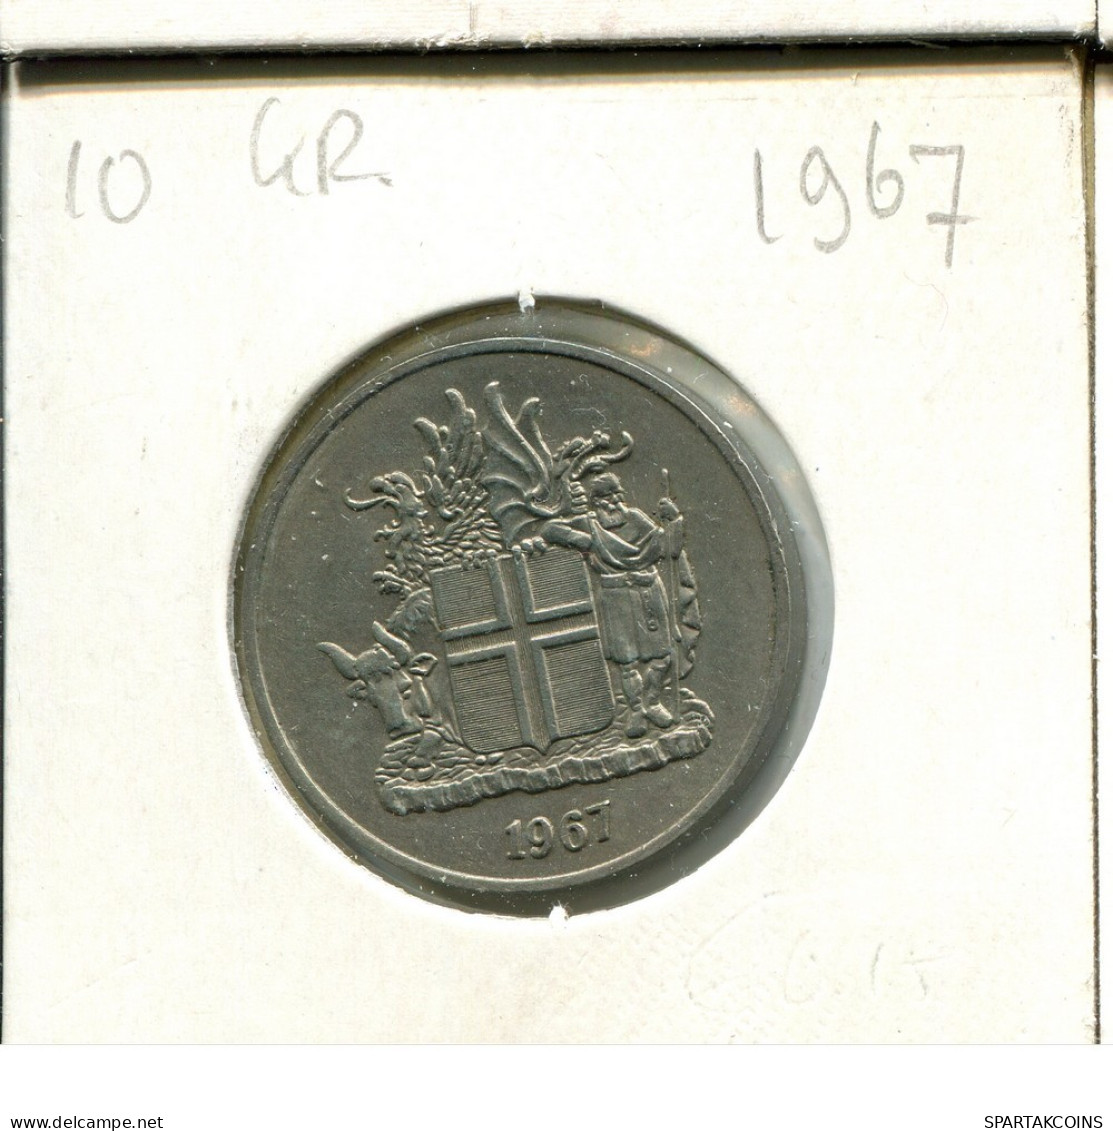 10 KRONUR 1967 ICELAND Coin #AT070.U.A - Iceland